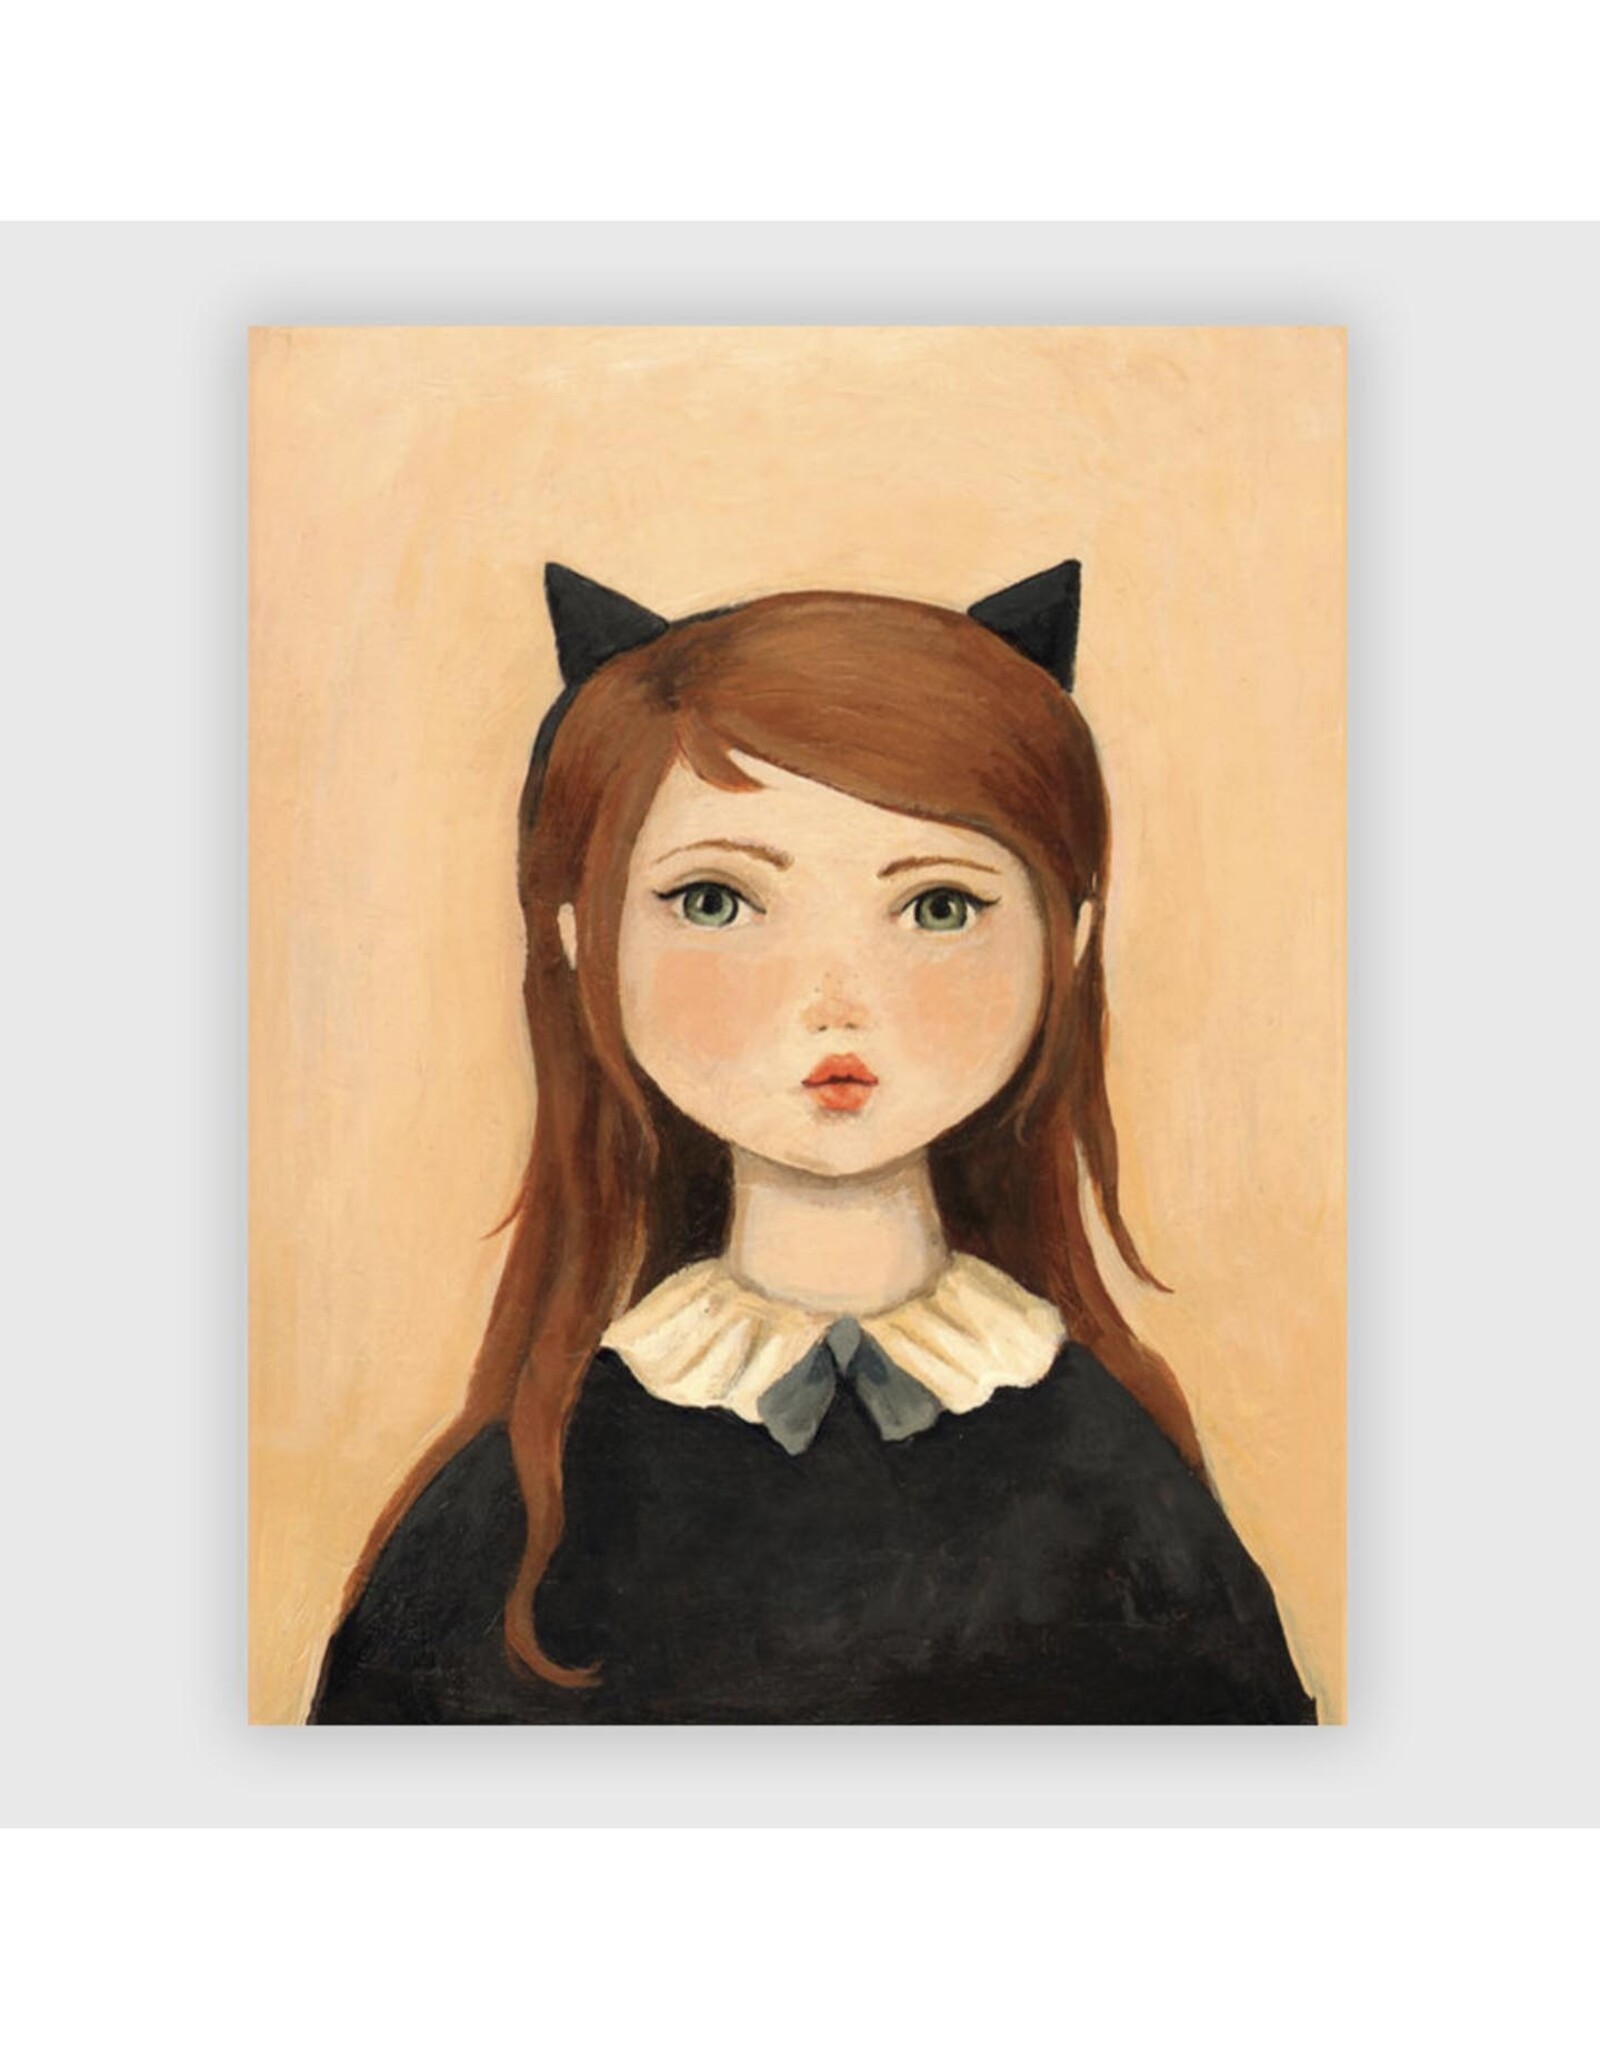 Cat Eared Girl Print